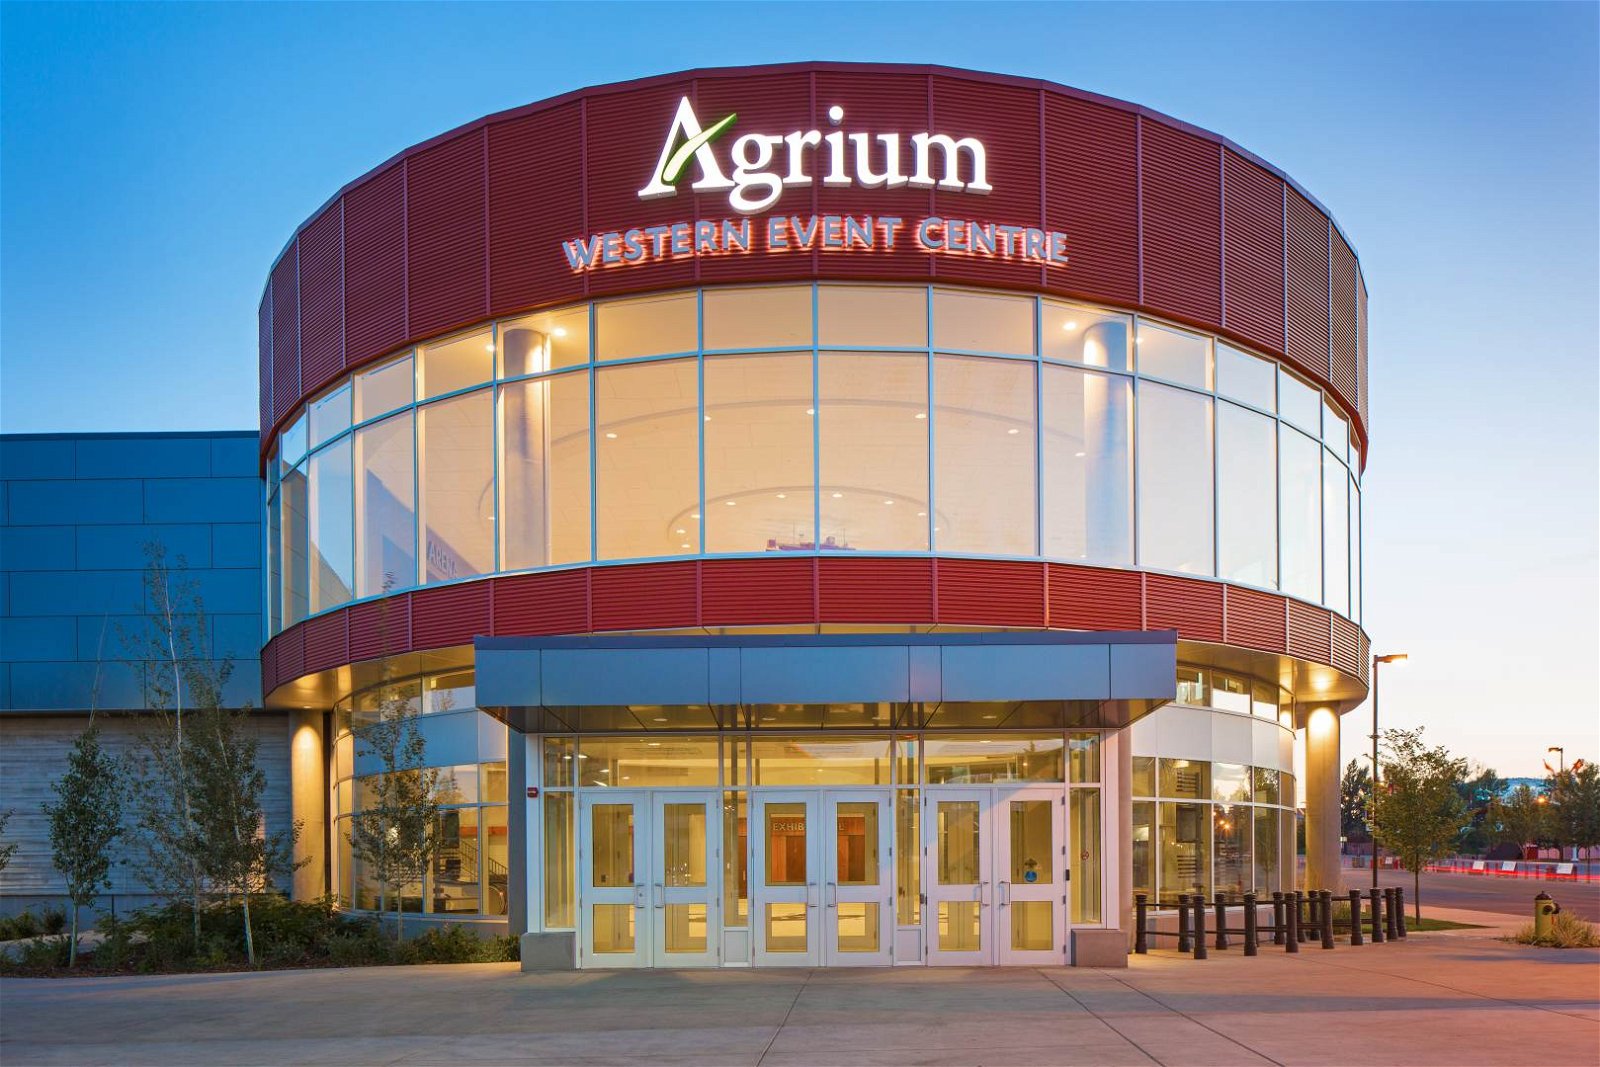 Calgary Stampede - Nutrien Western Event Centre